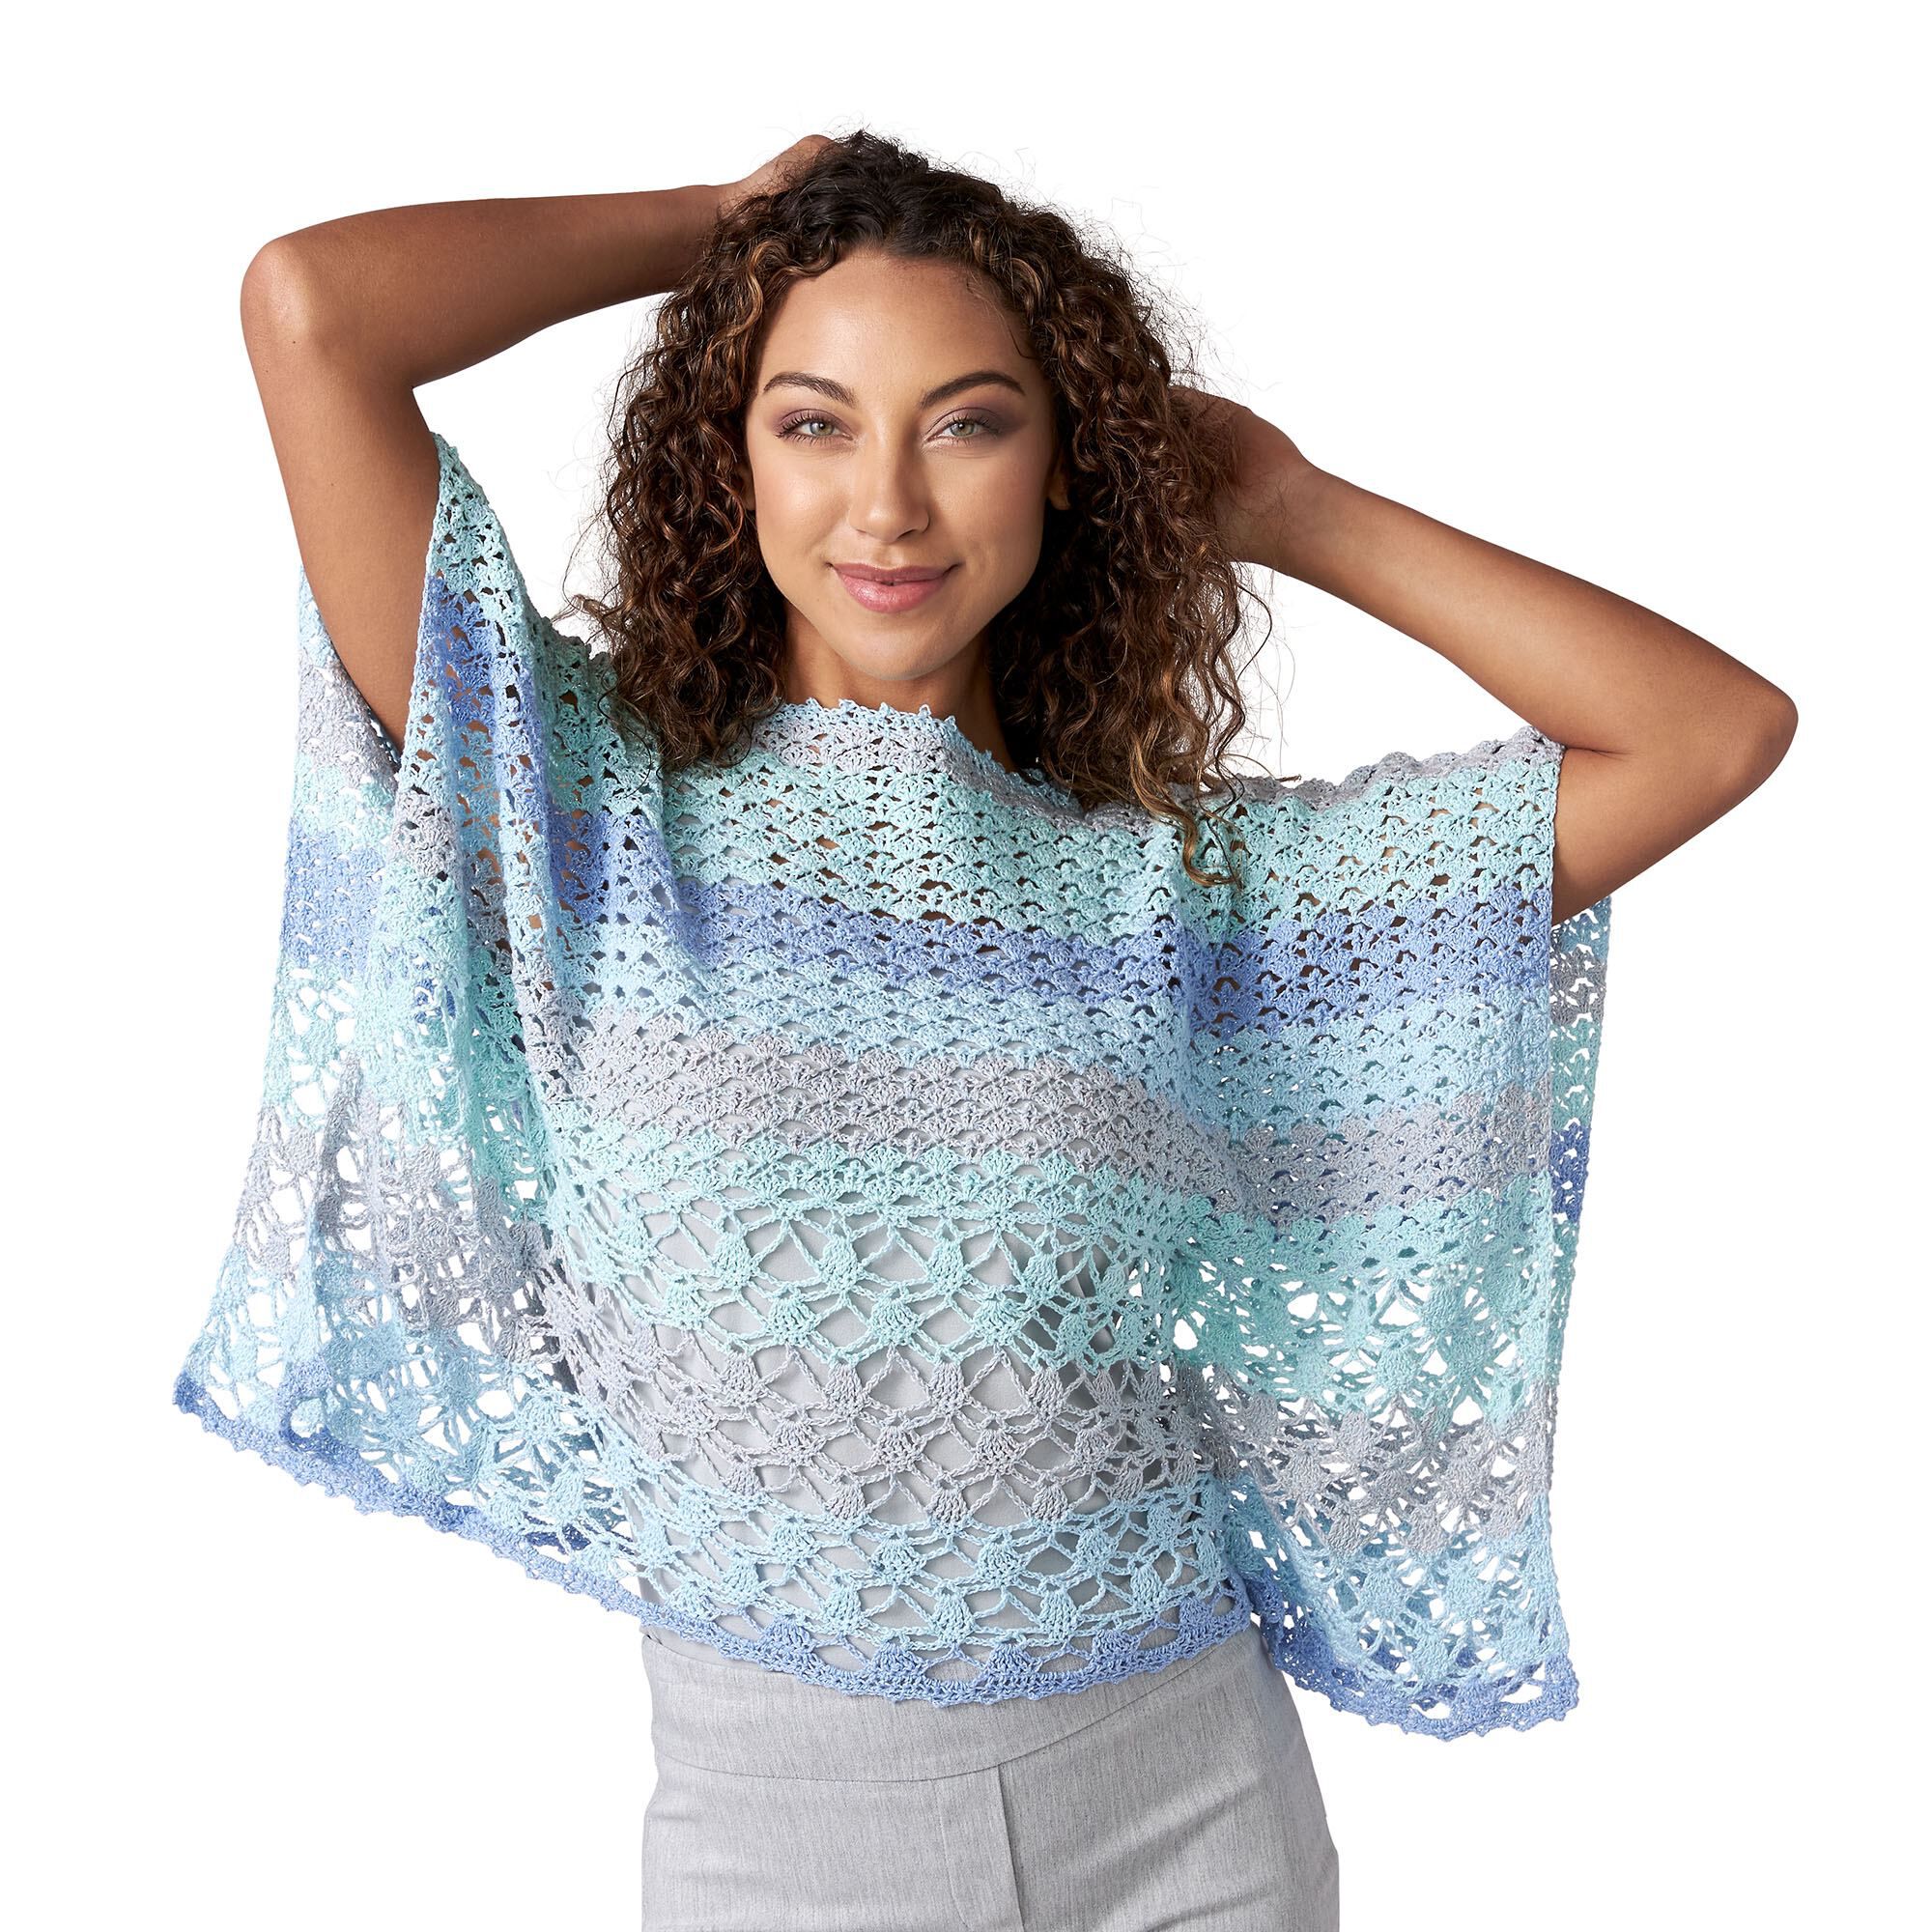 Crochet Patterns Galore - Summer Rules Top